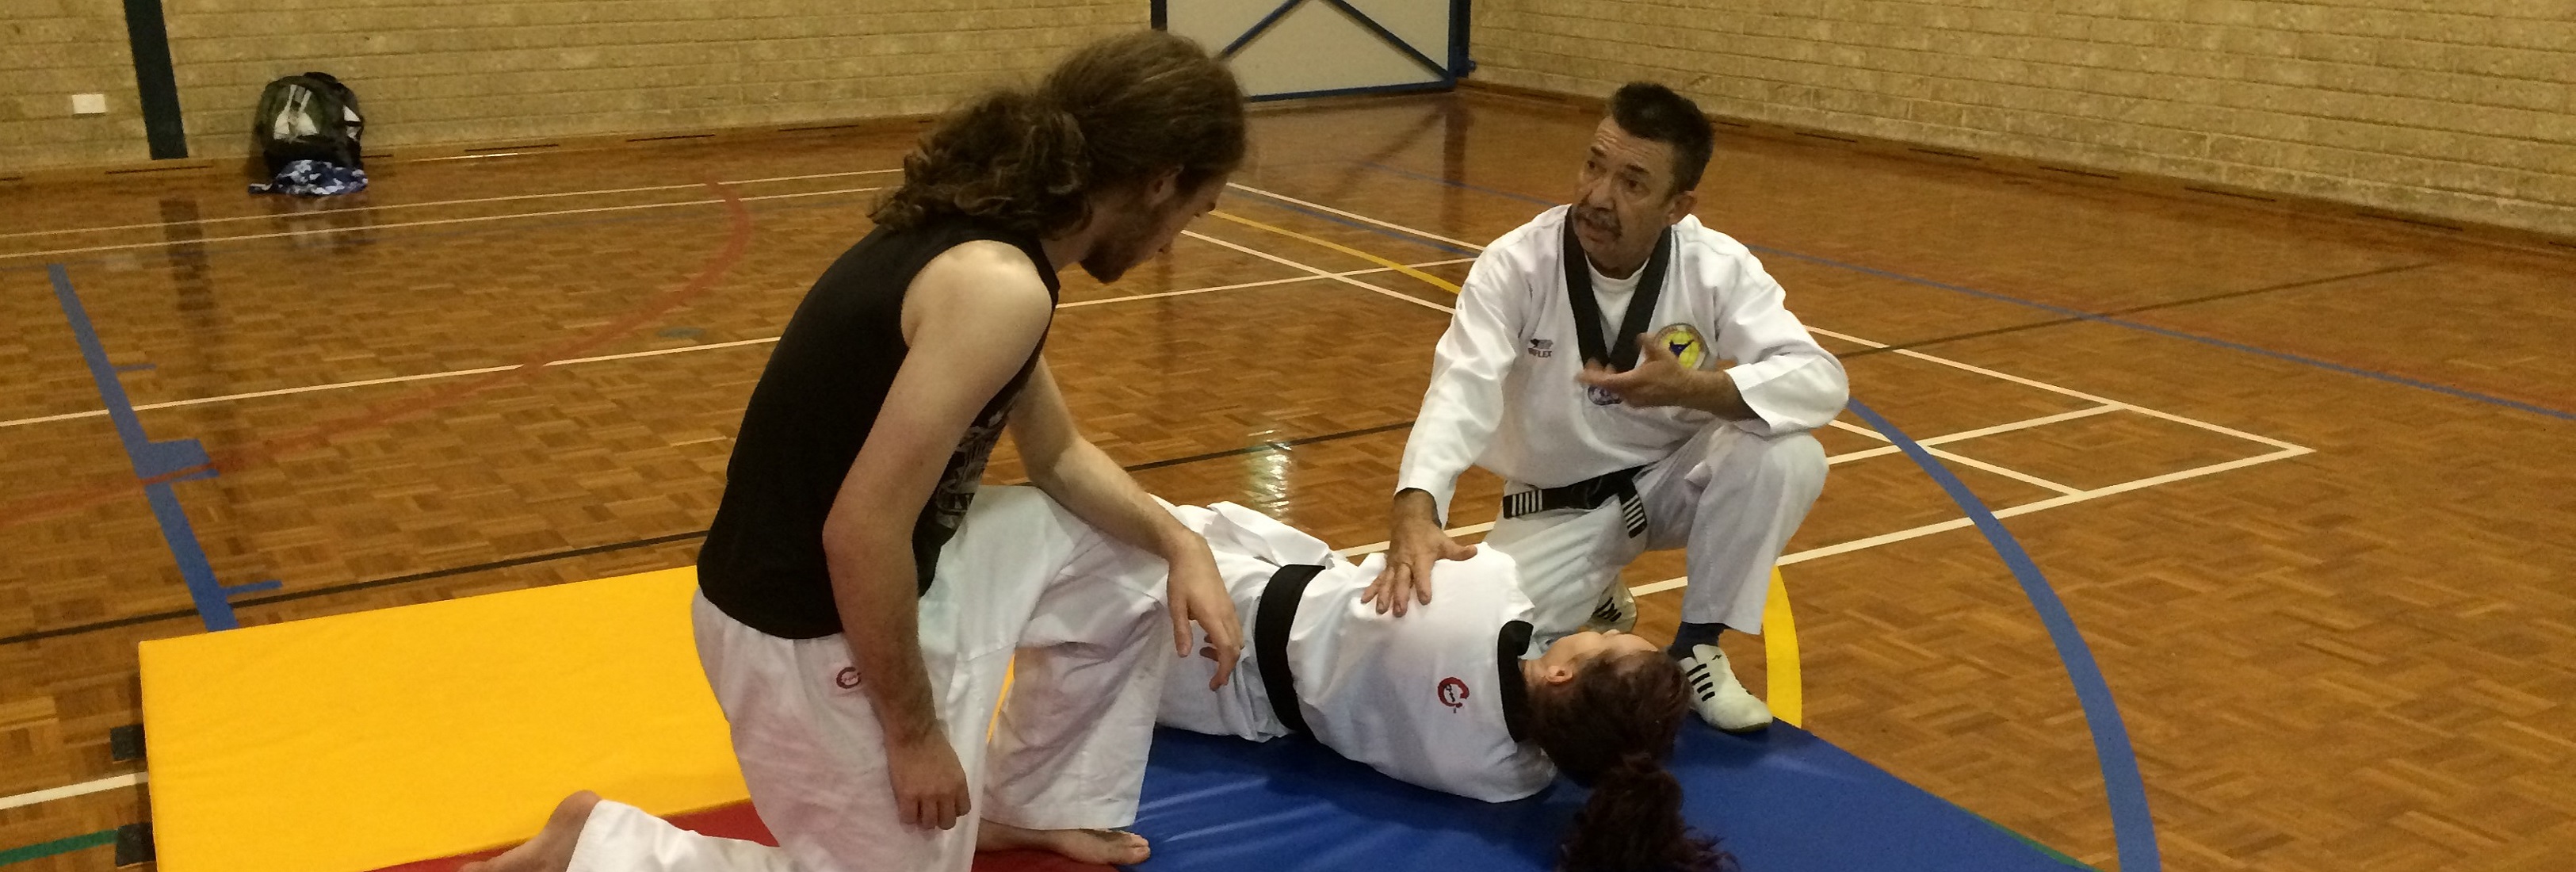 receive quality instruction at scarborough taekwondo